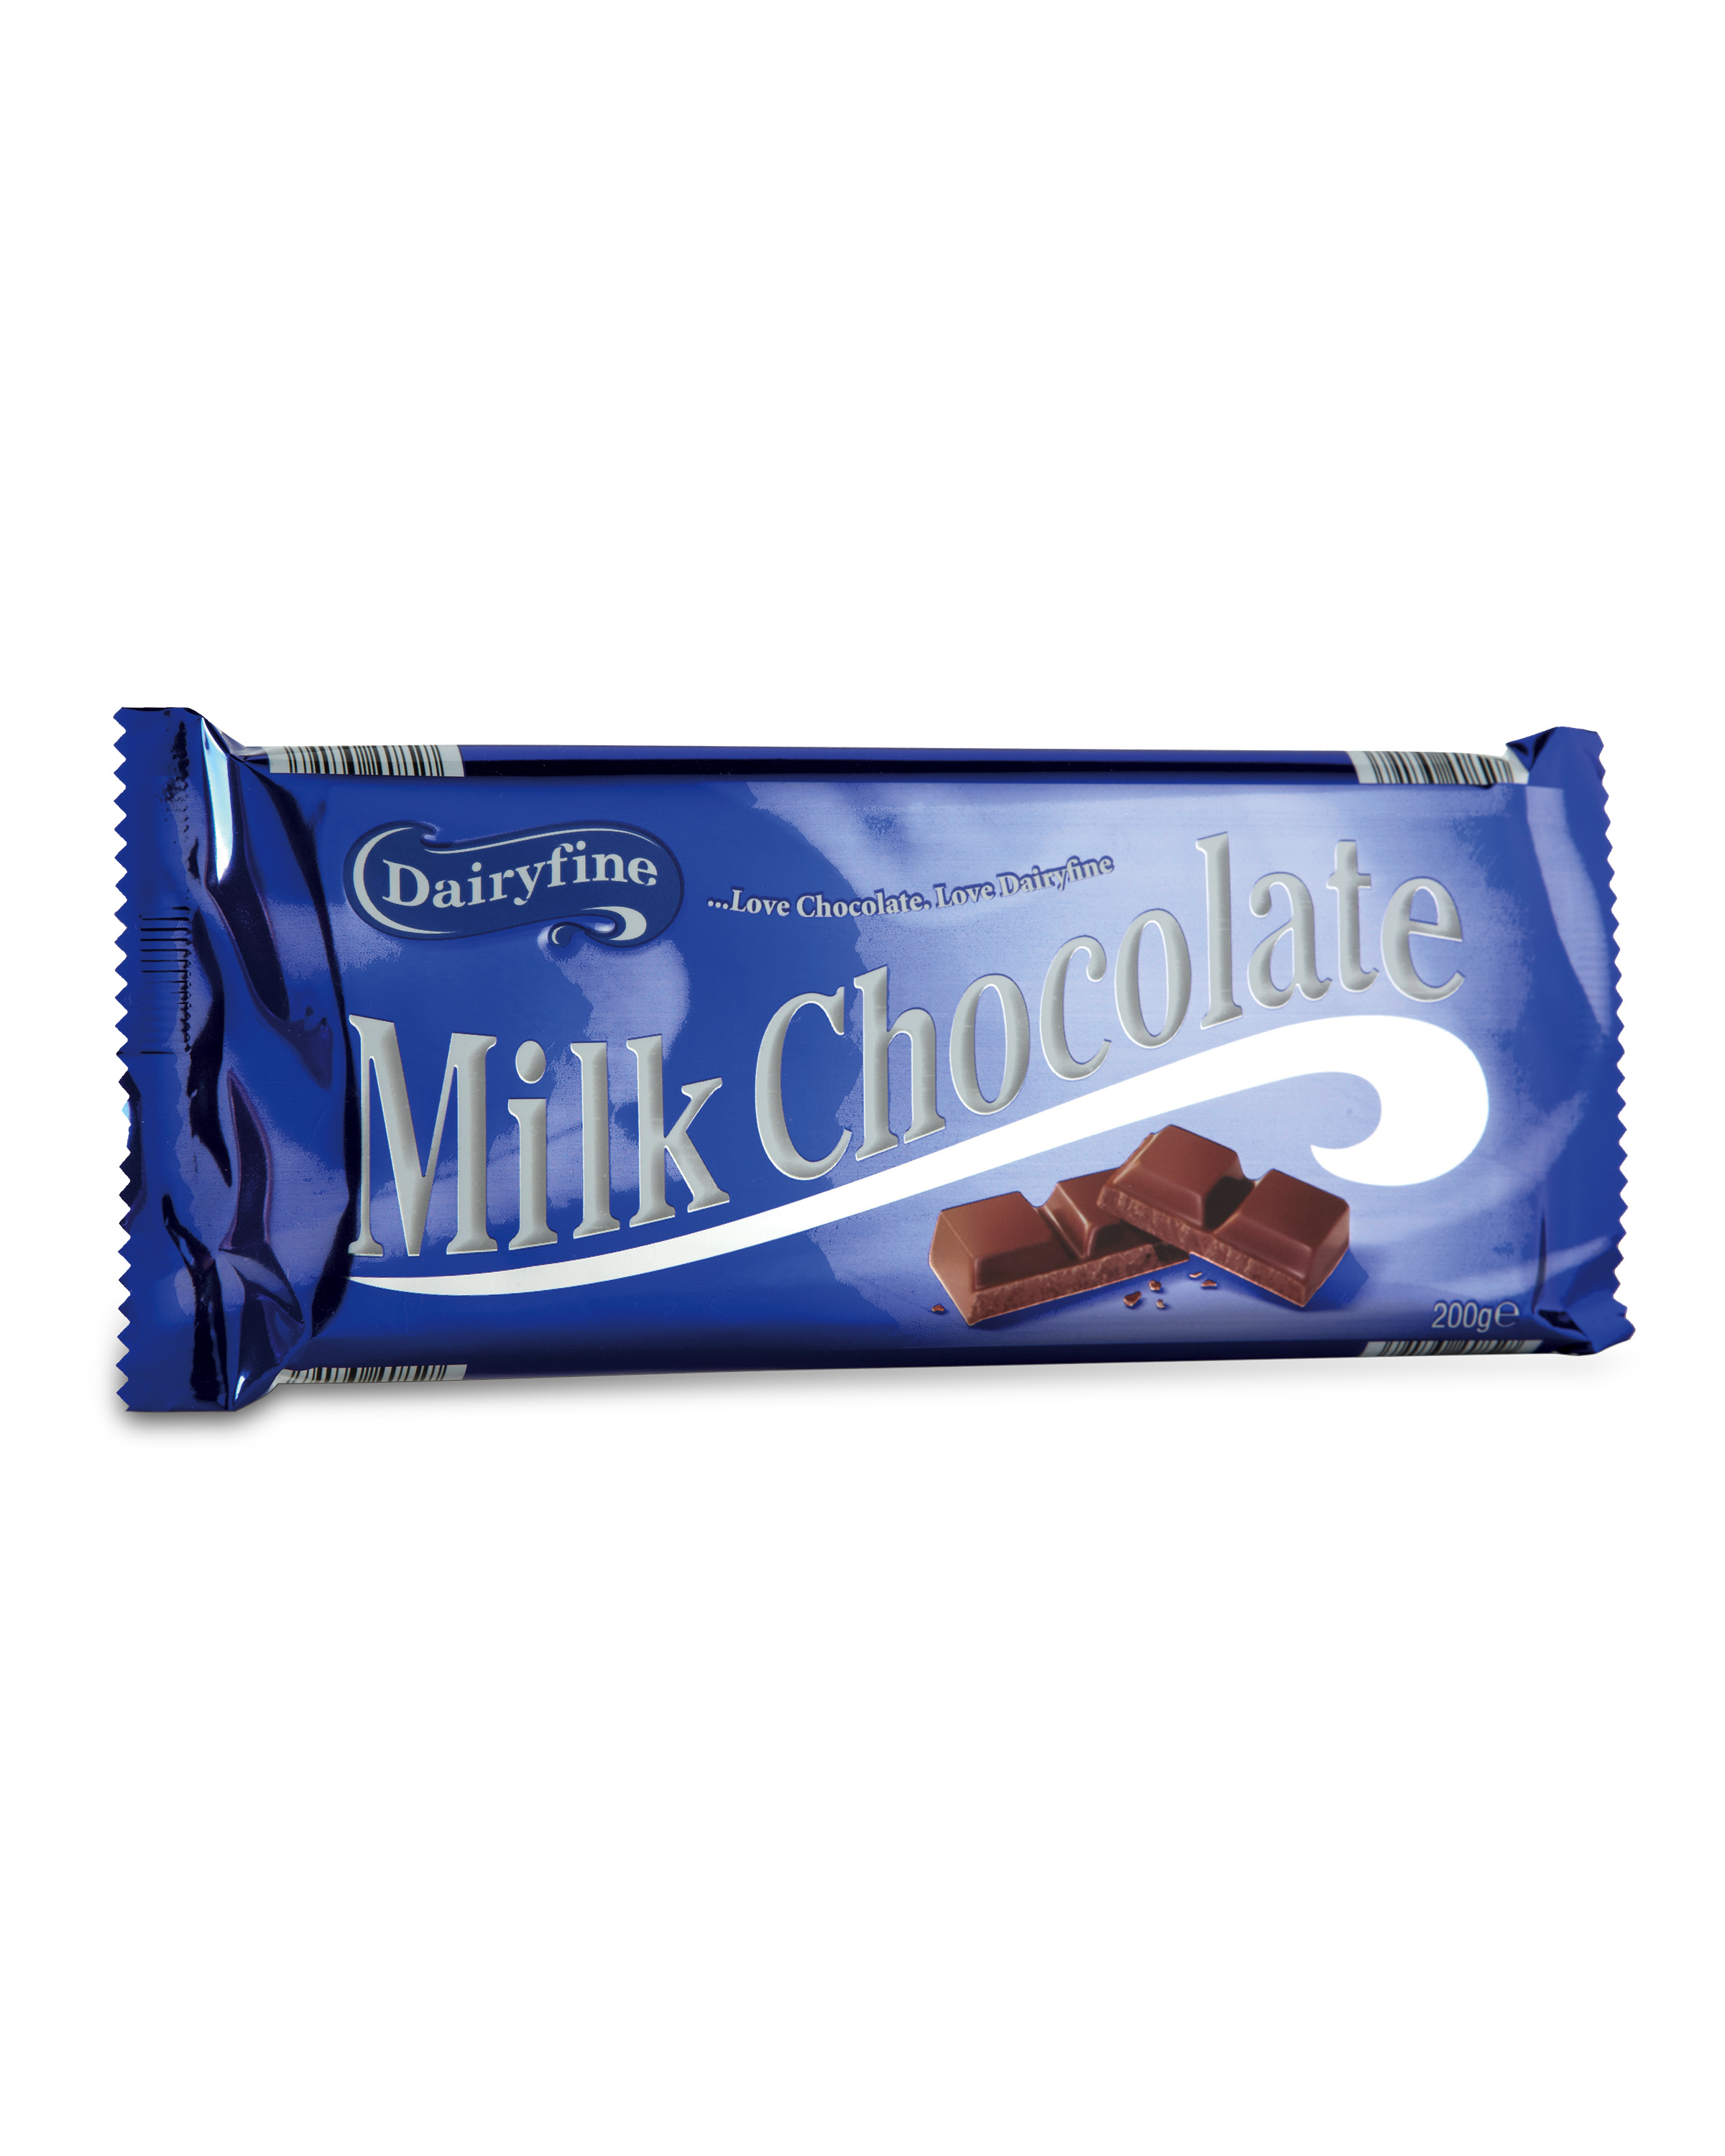 Milk Chocolate Deal at Aldi, Offer Calendar week